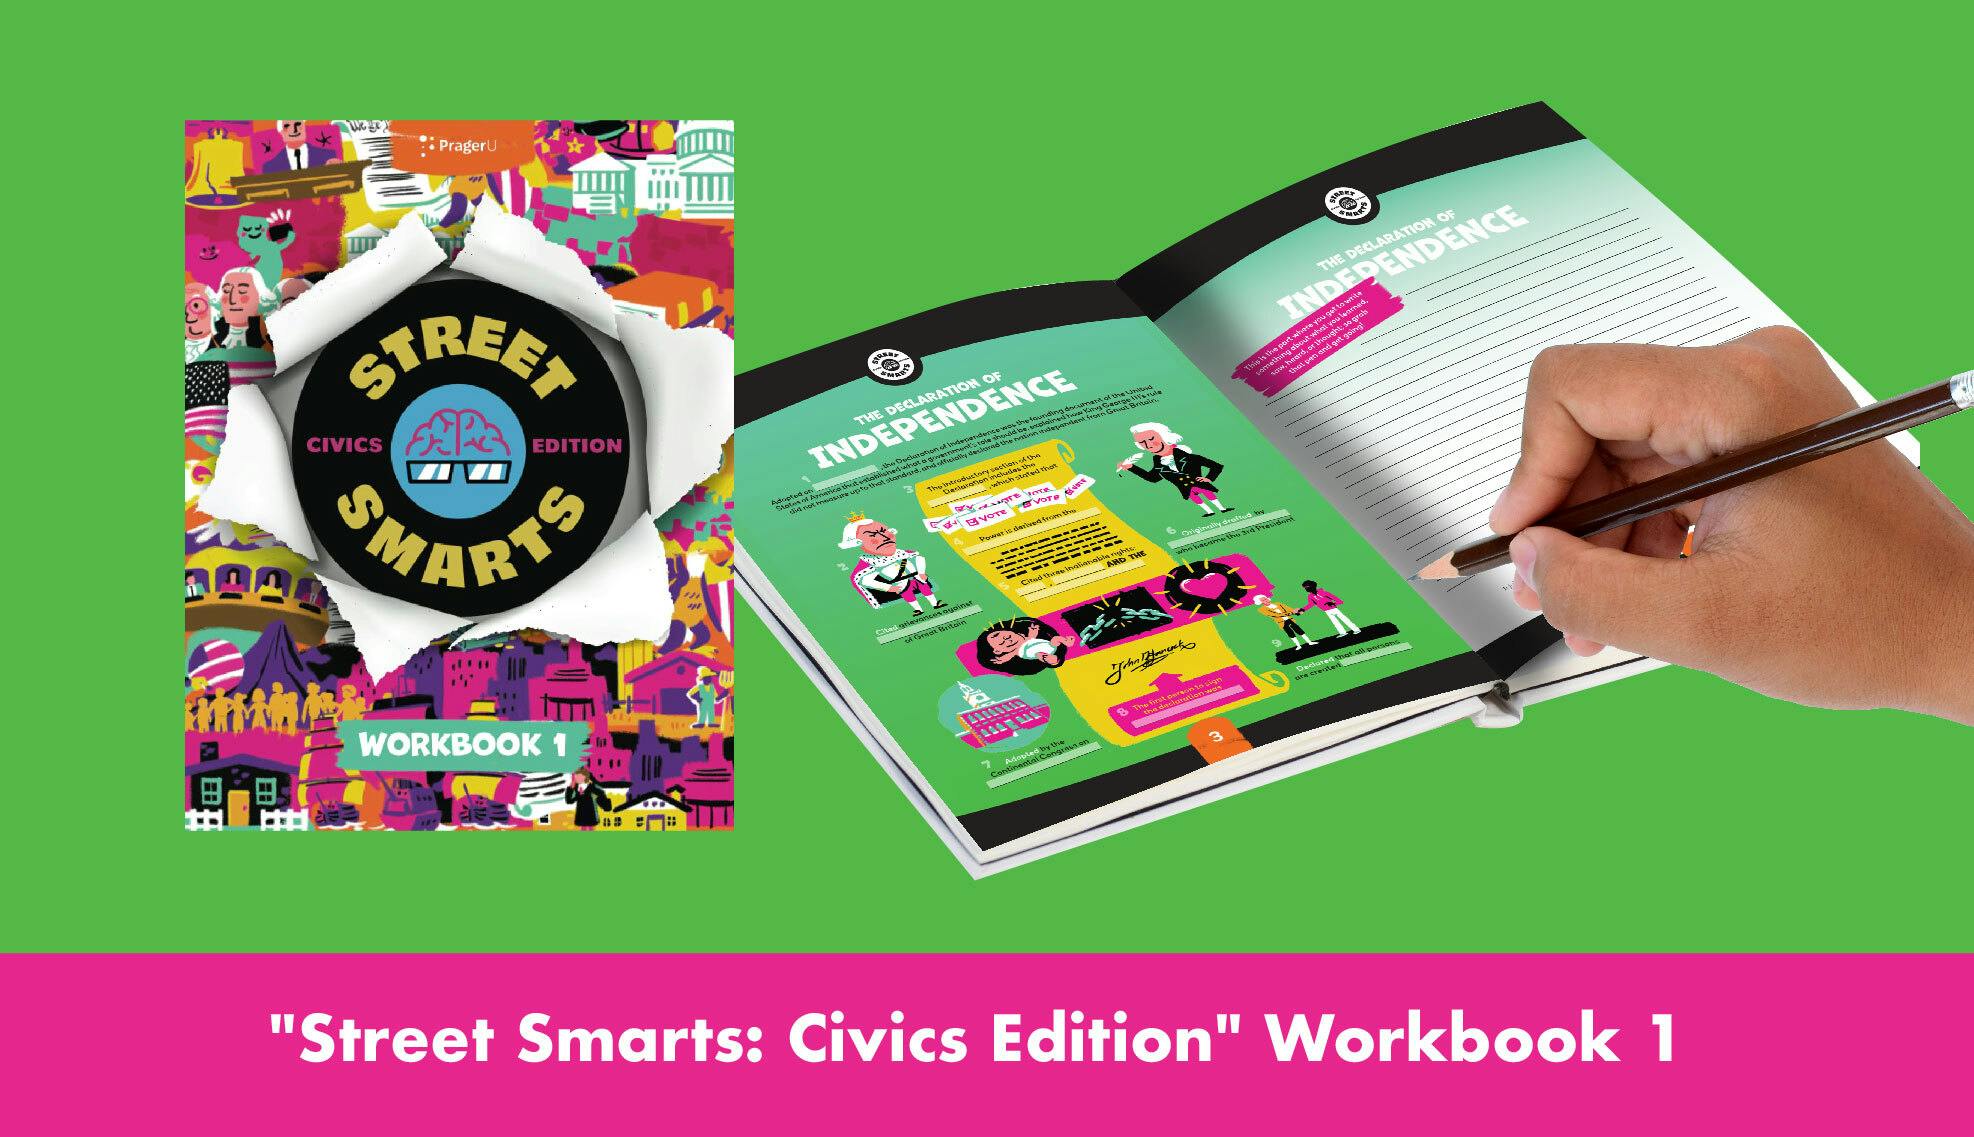 Street Smarts: Civics Edition Workbook 1